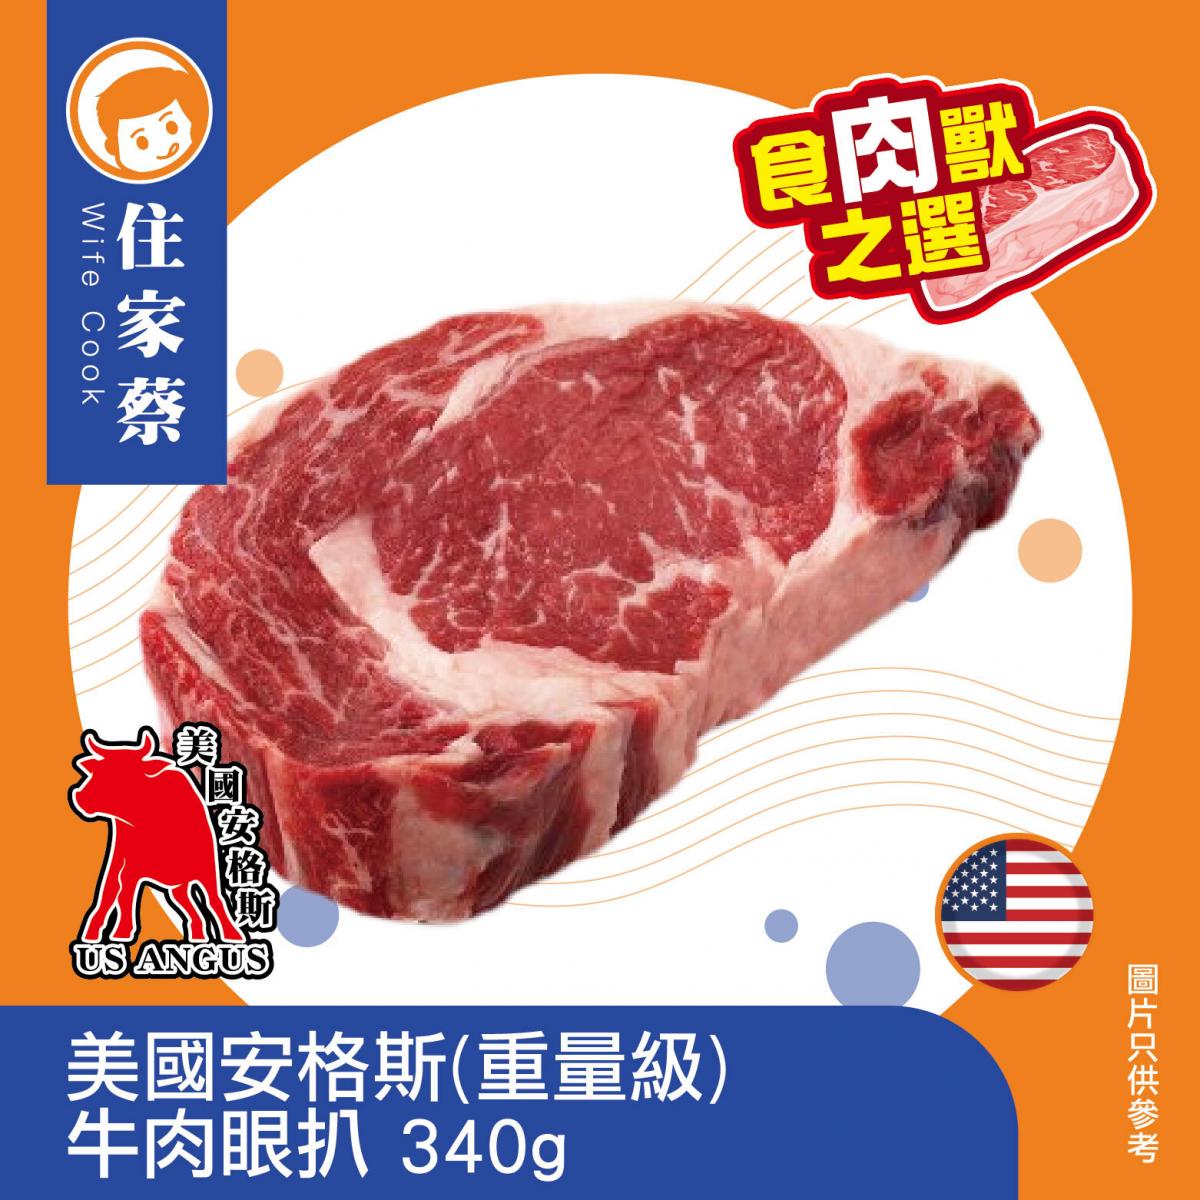 US Angus Beef Ribeye 340g 美國安格斯(重量級)牛肉眼扒